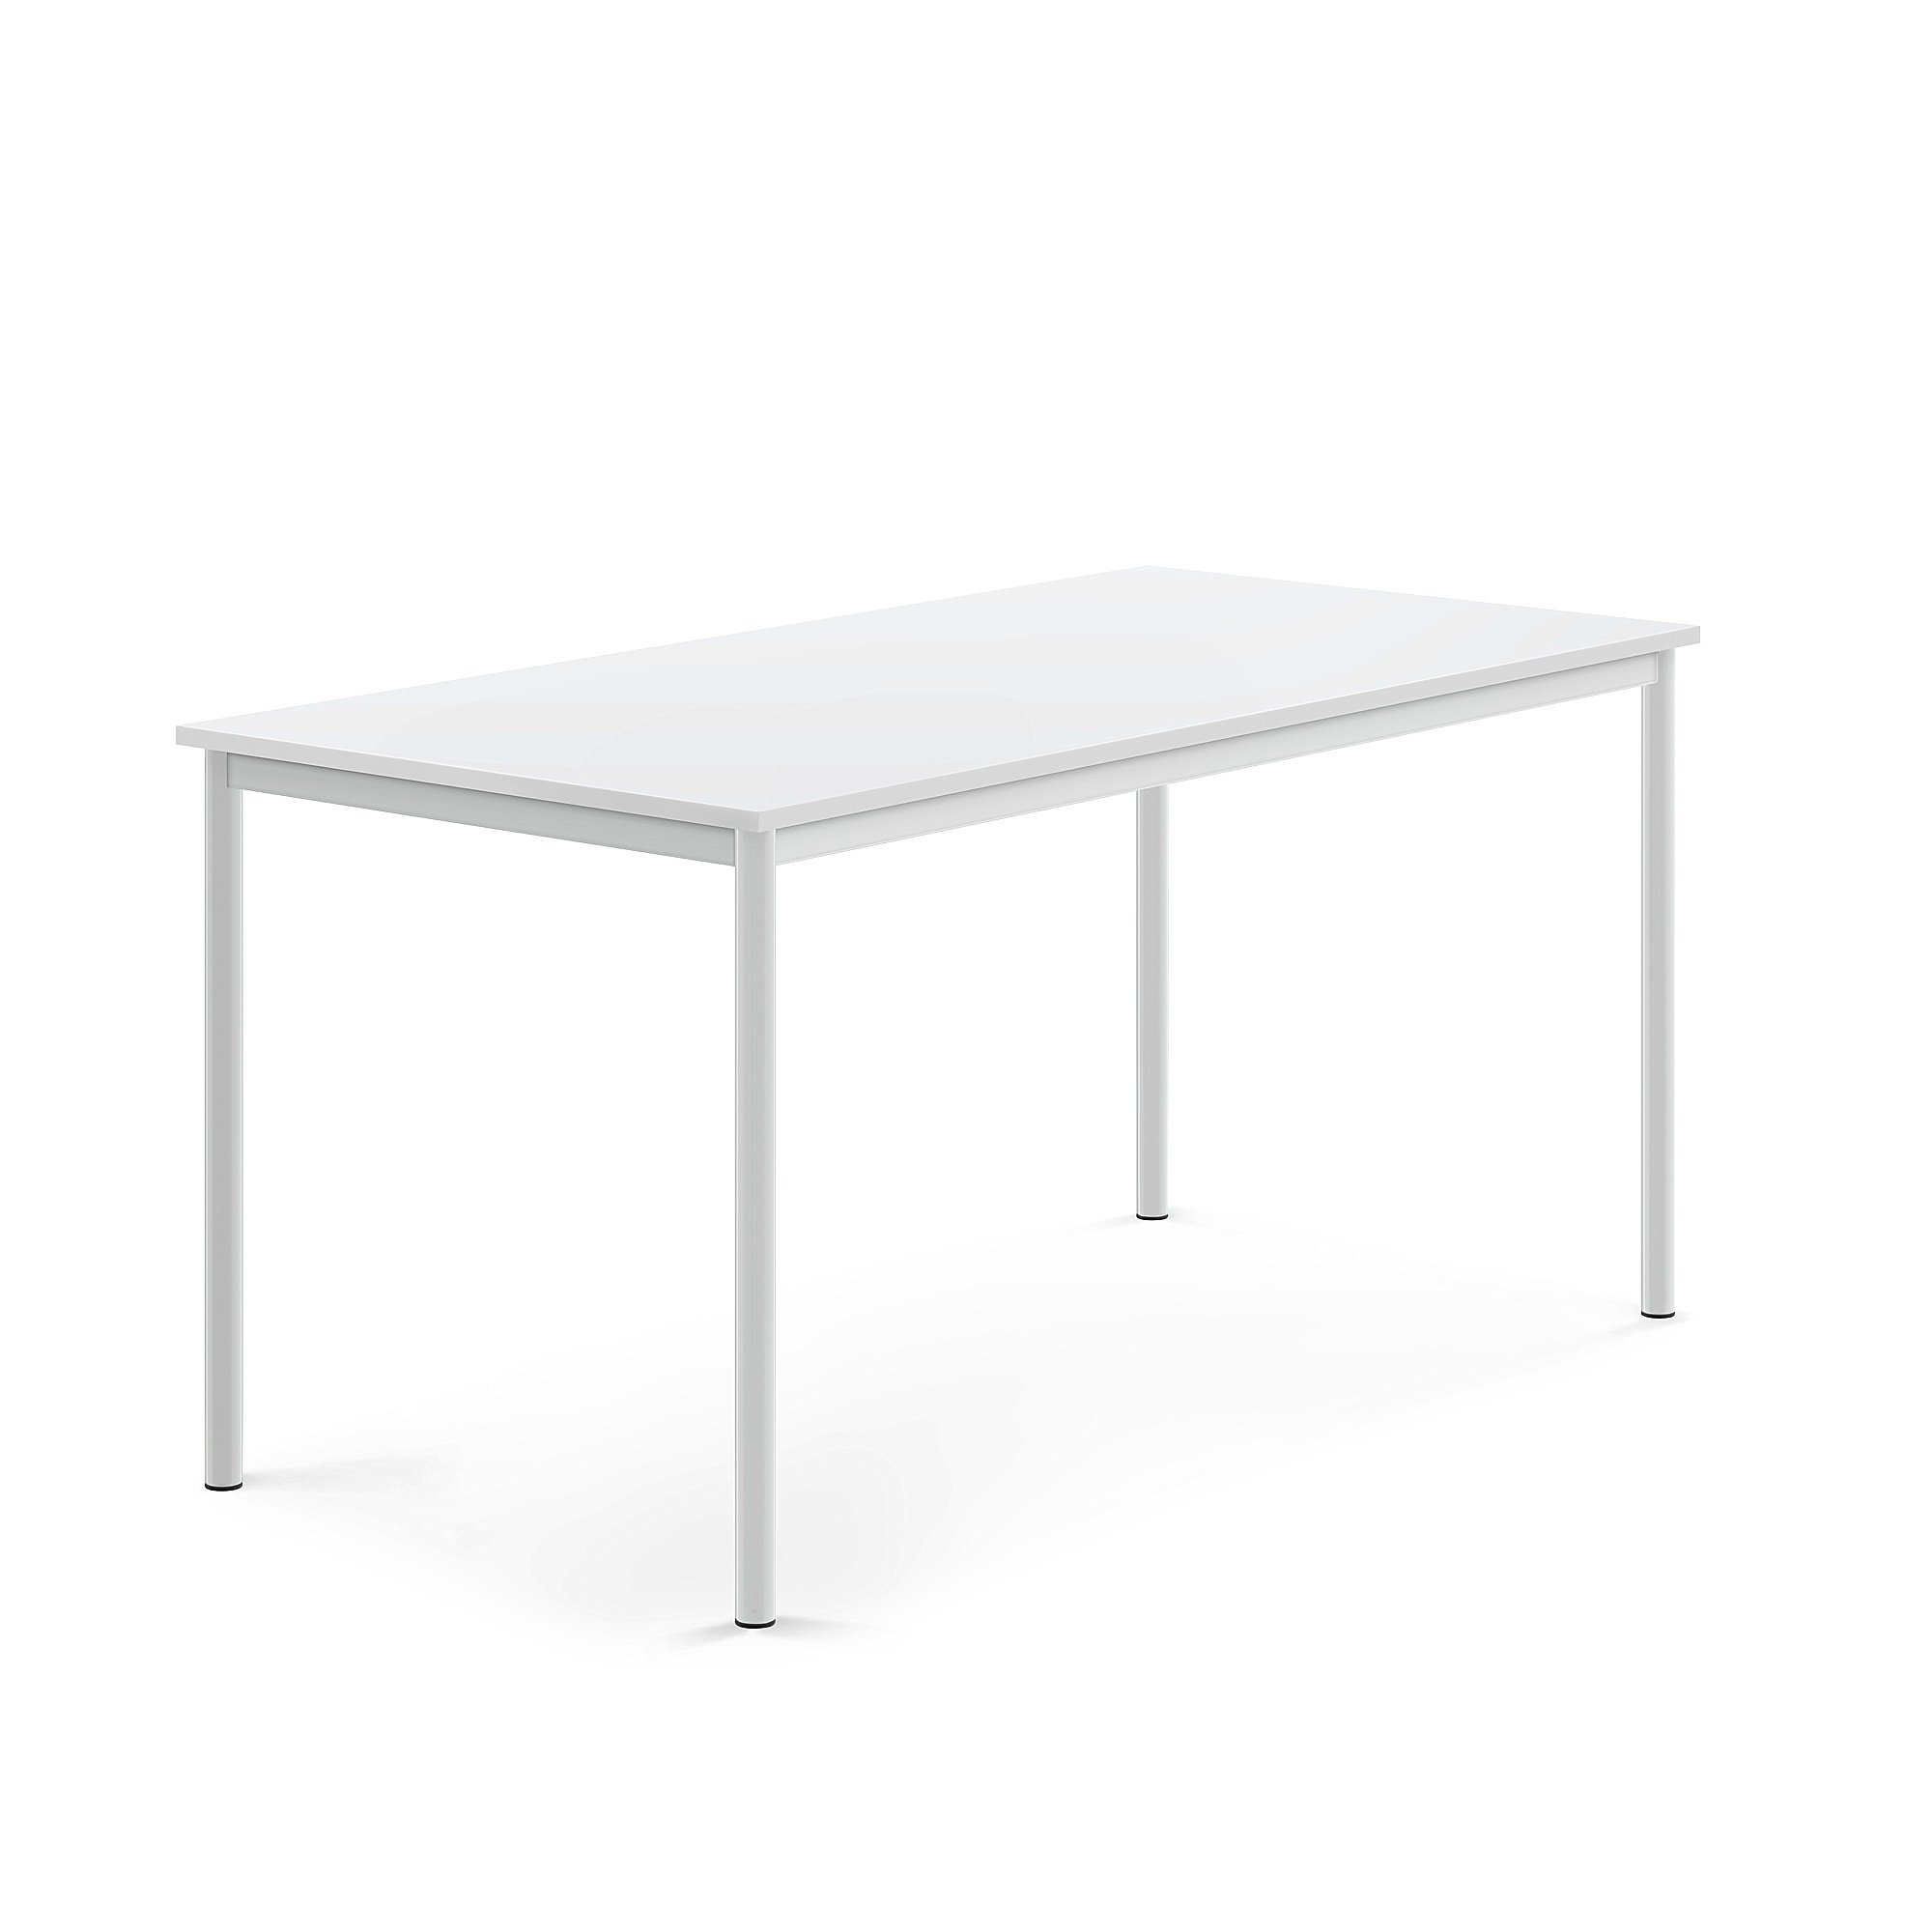 Stůl SONITUS, 1600x800x760 mm, bílé nohy, HPL deska tlumící hluk, bílá